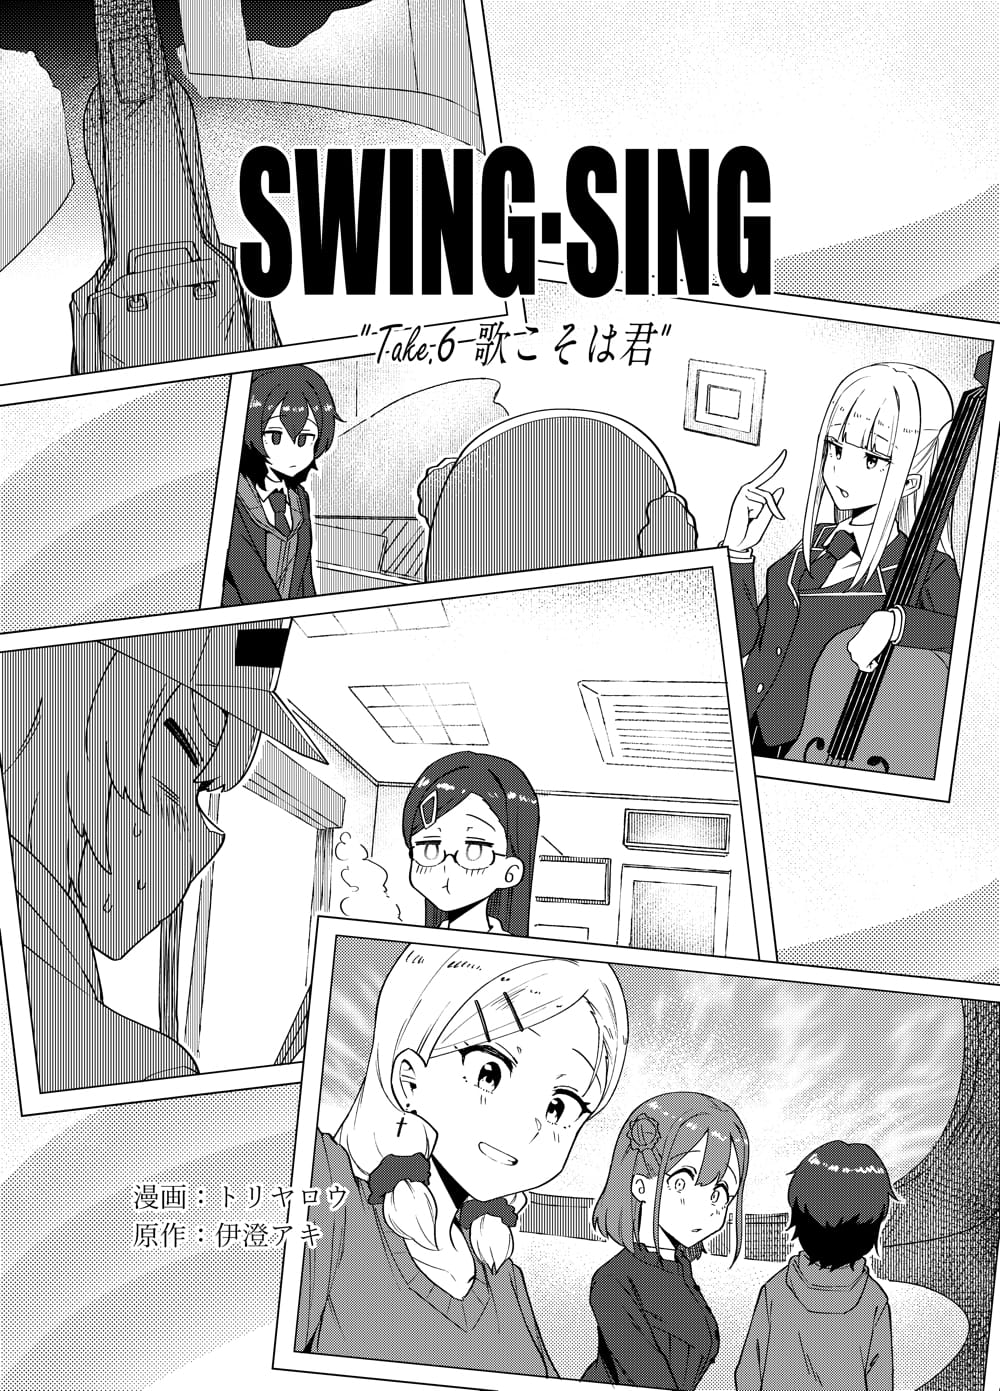 Swing,sing - Page 1